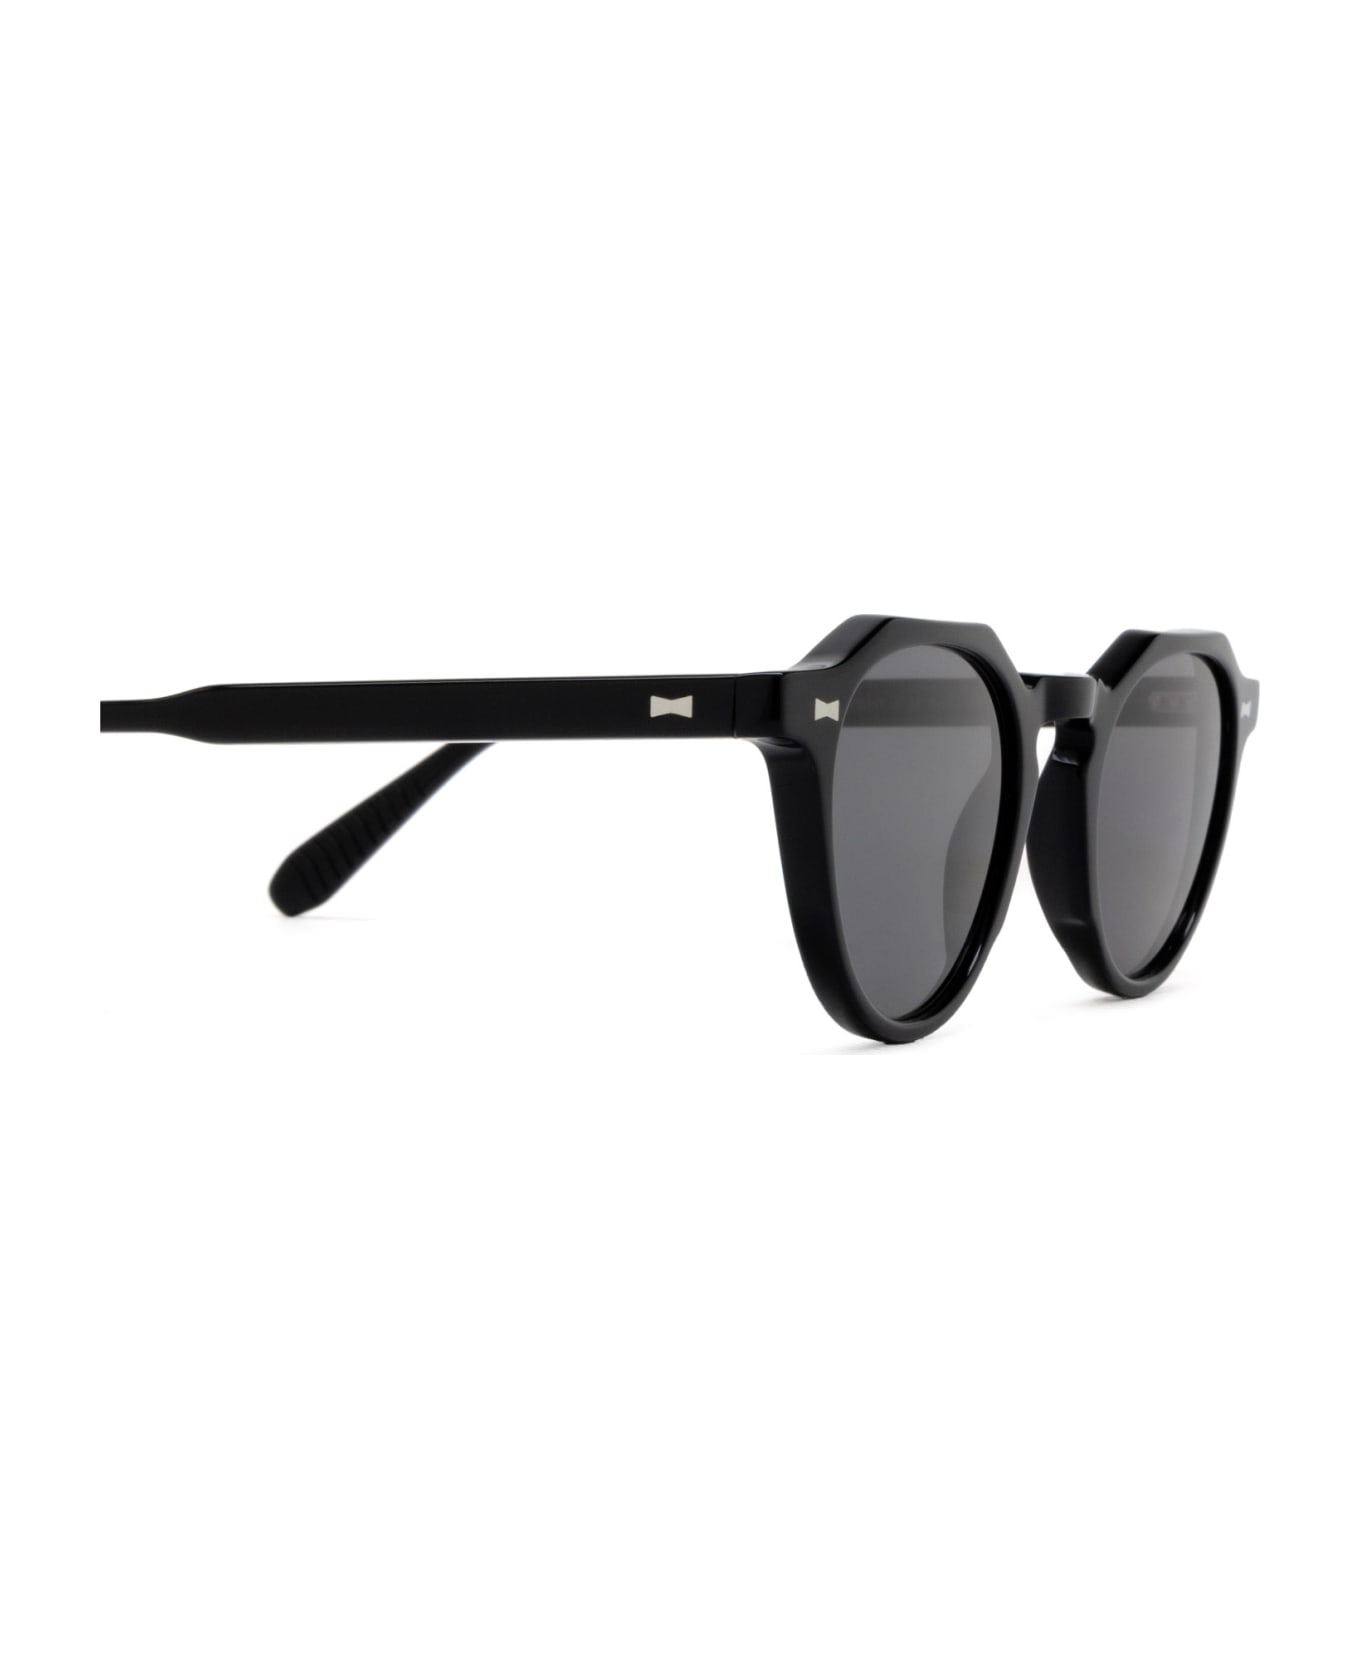 Cubitts Cartwright Ii Sun Black Sunglasses - Black